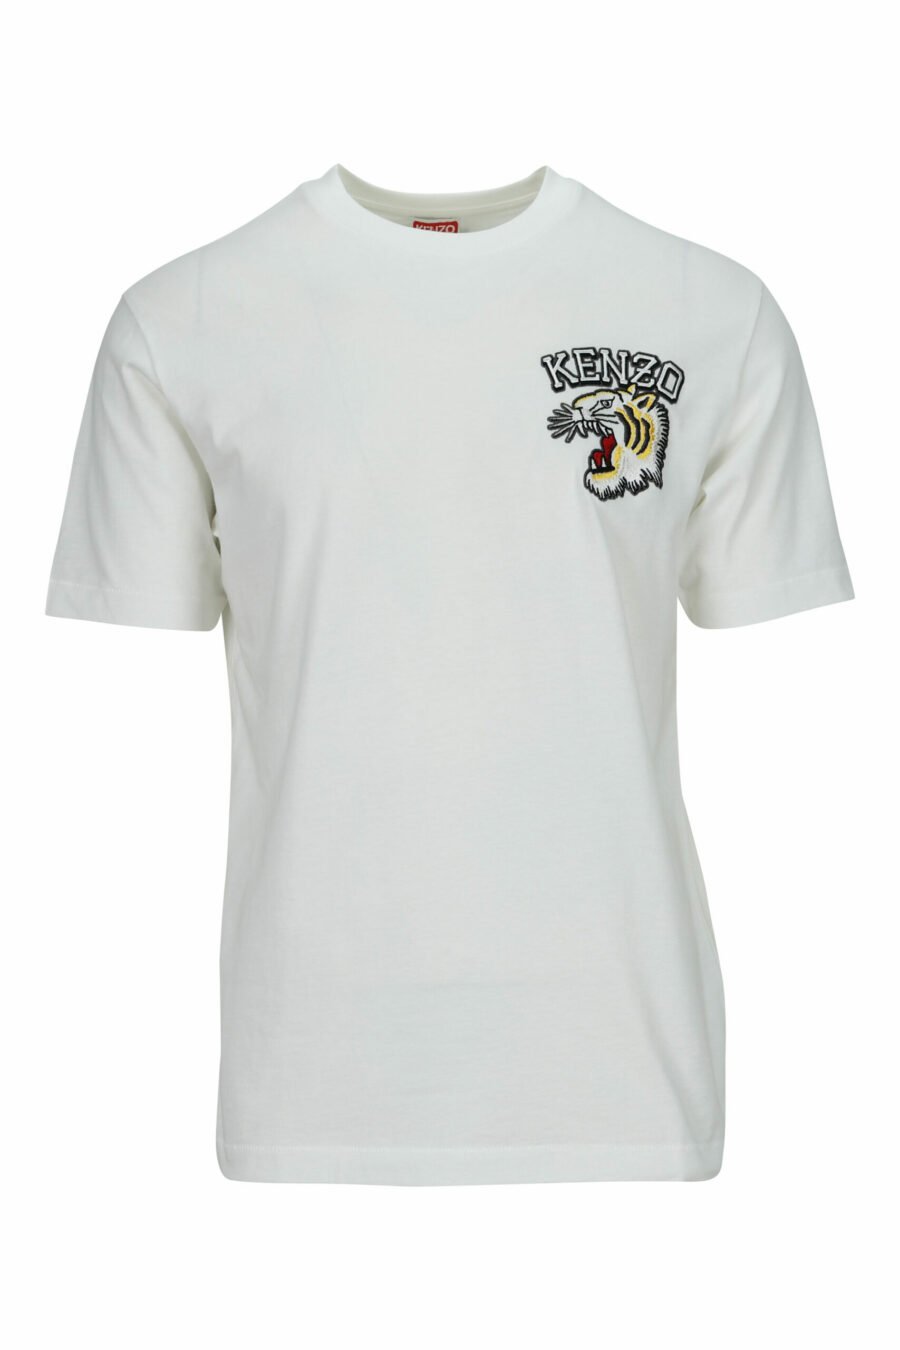 Camiseta blanca "oversize" logo pequeño tigre relieve - 3612230571716 scaled